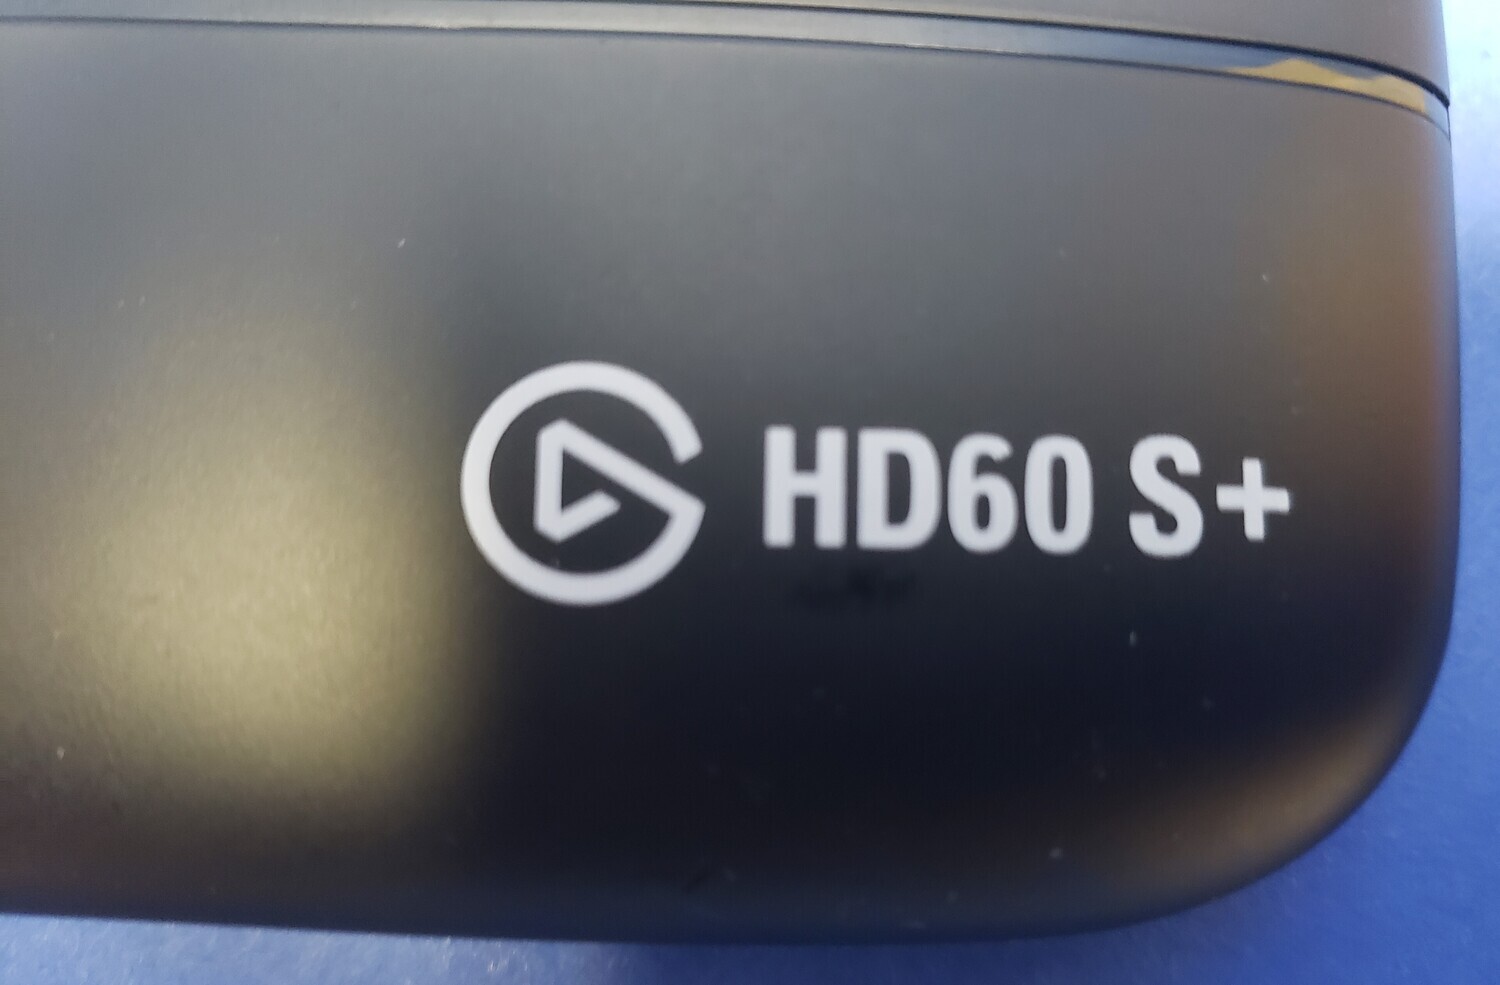 ELGATO HD60 20GAR9901 CAPTURE CARD 1080p60 HDR10 CAPTURE 4K60 HDR10 PASS THROUGH, ULTRA-